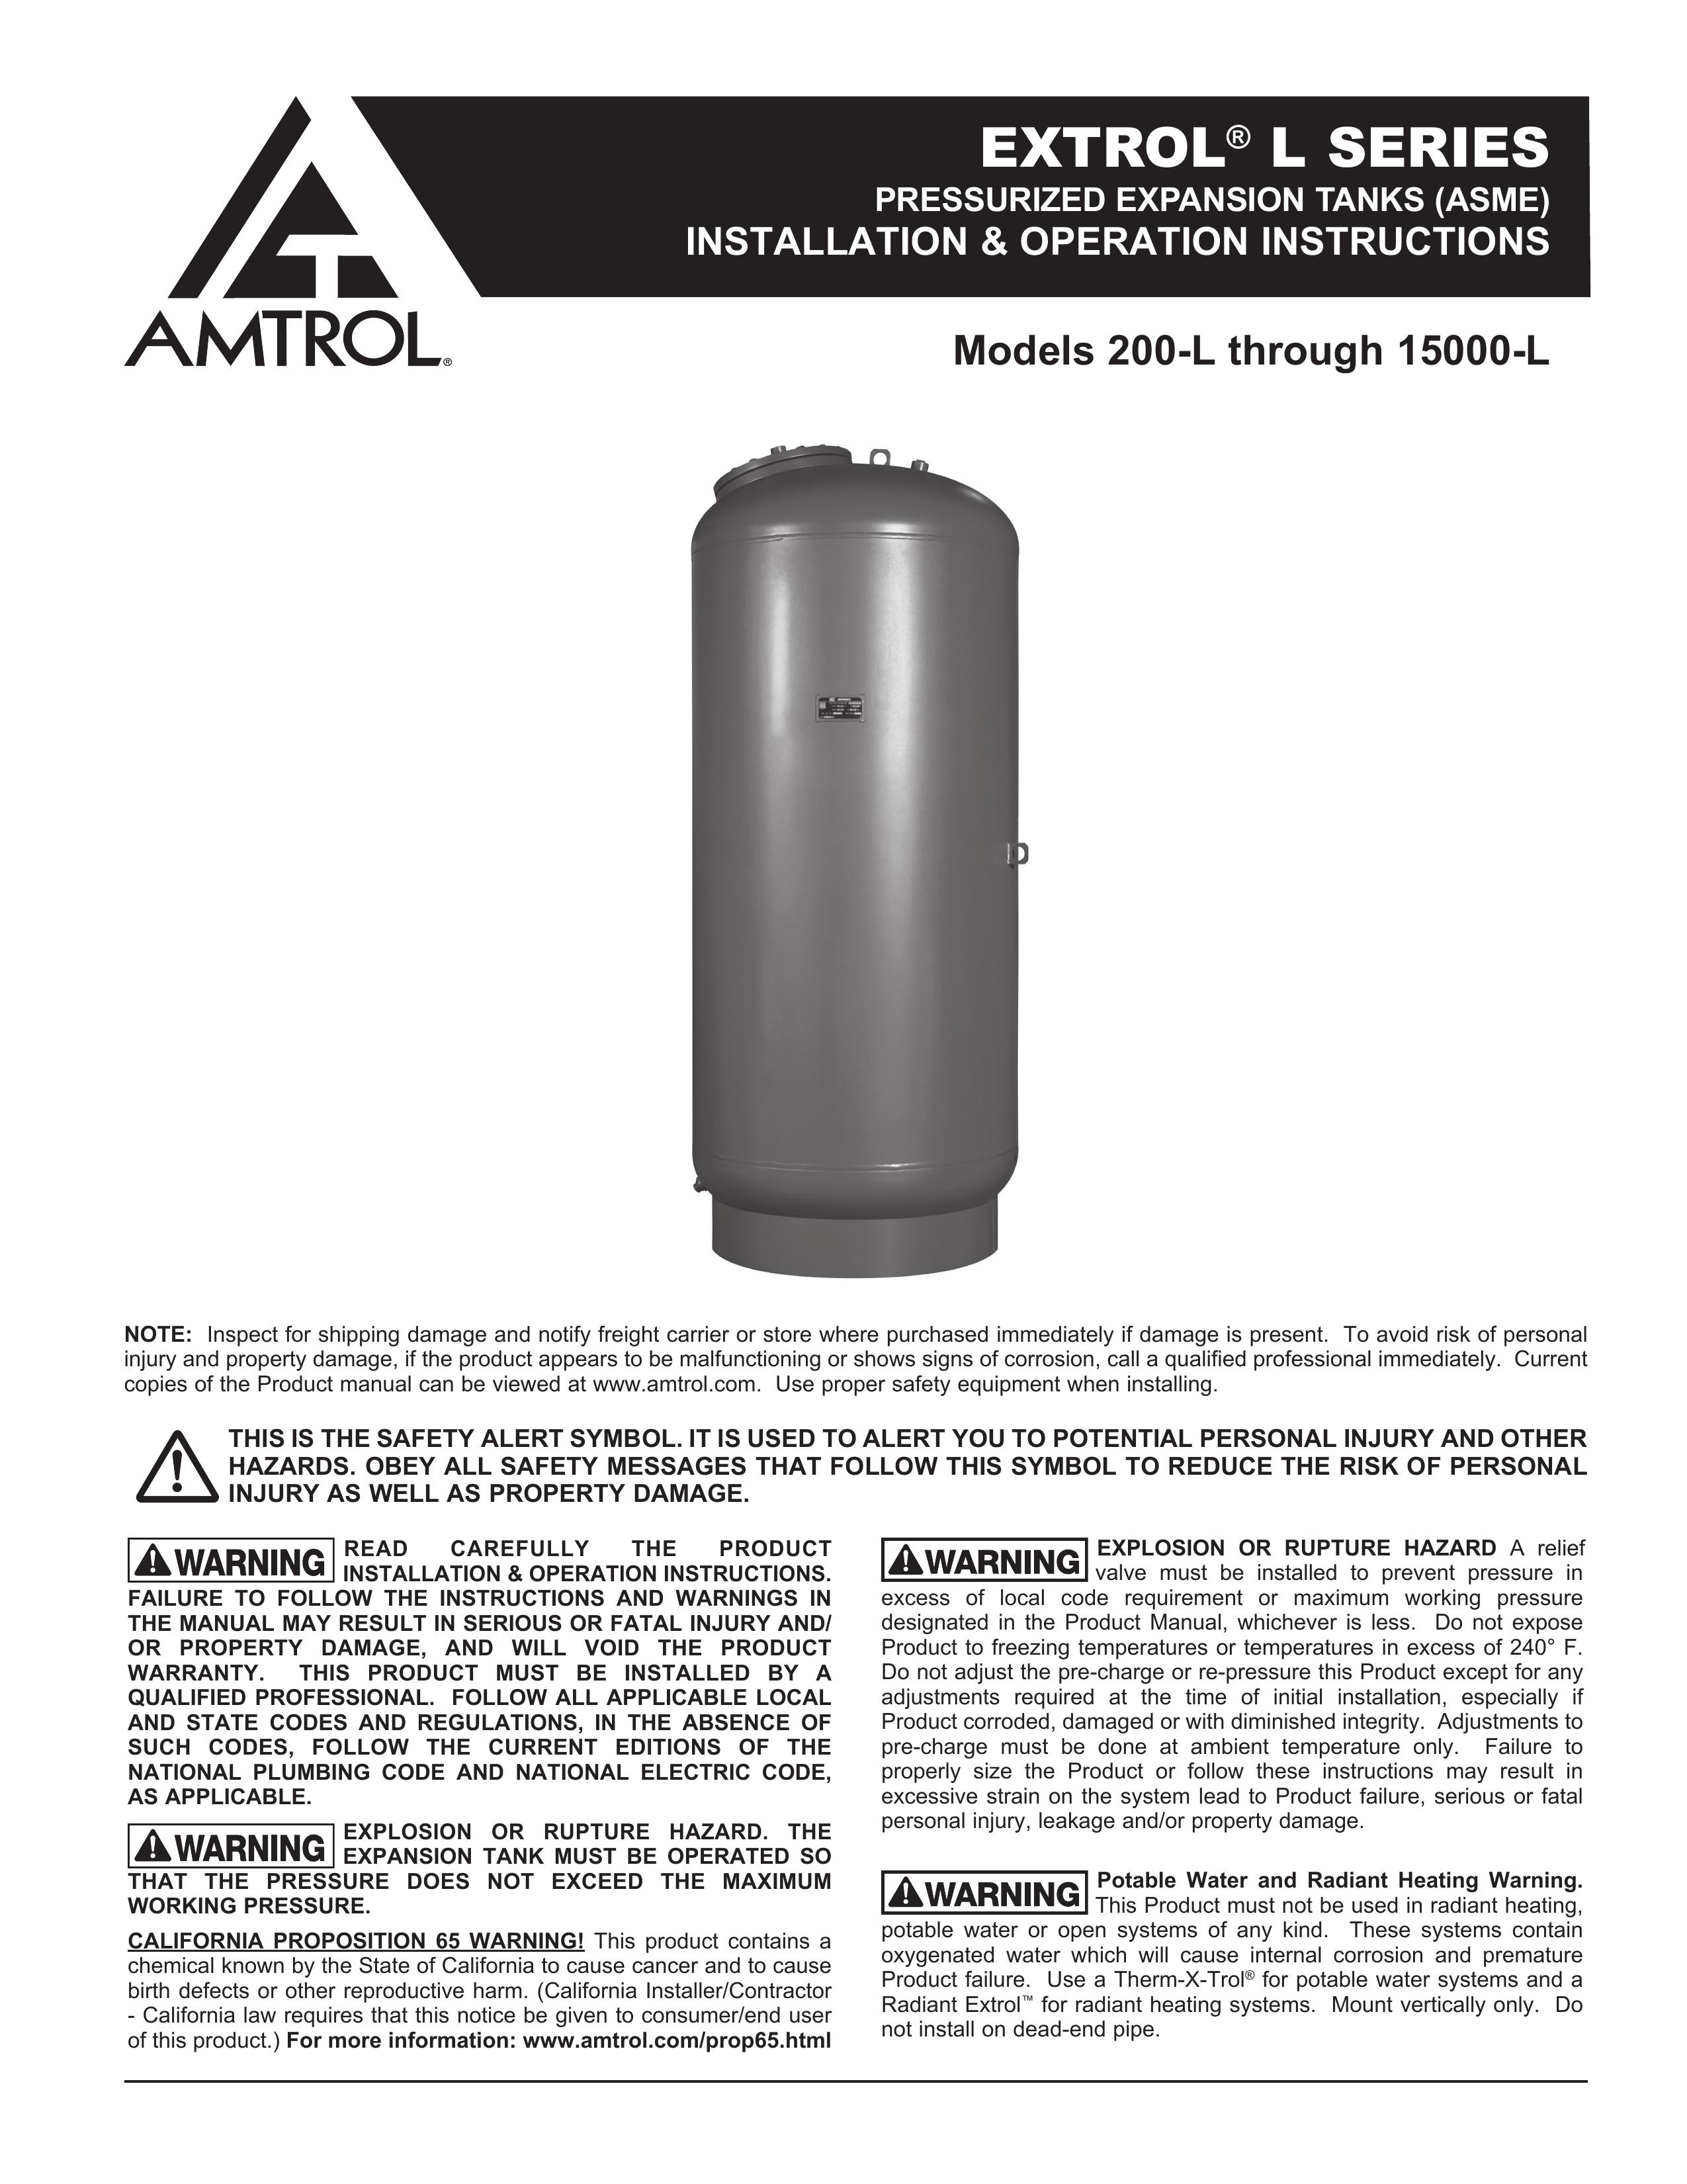 Amtrol extrol l series pressurized expansion tank Marine Sanitation System User Manual